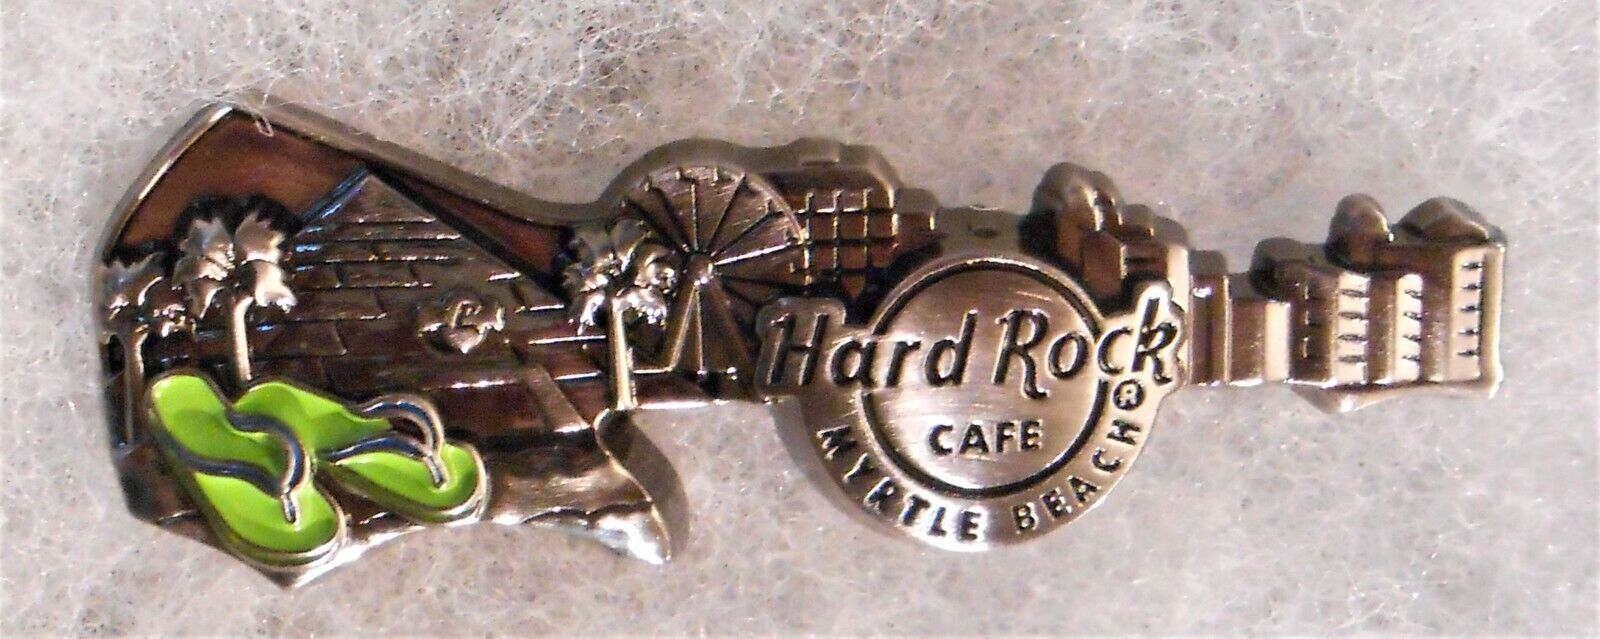 HARD ROCK CAFE MYRTLE BEACH 3D SKYLINE GUITAR SERIES PIN # 88395